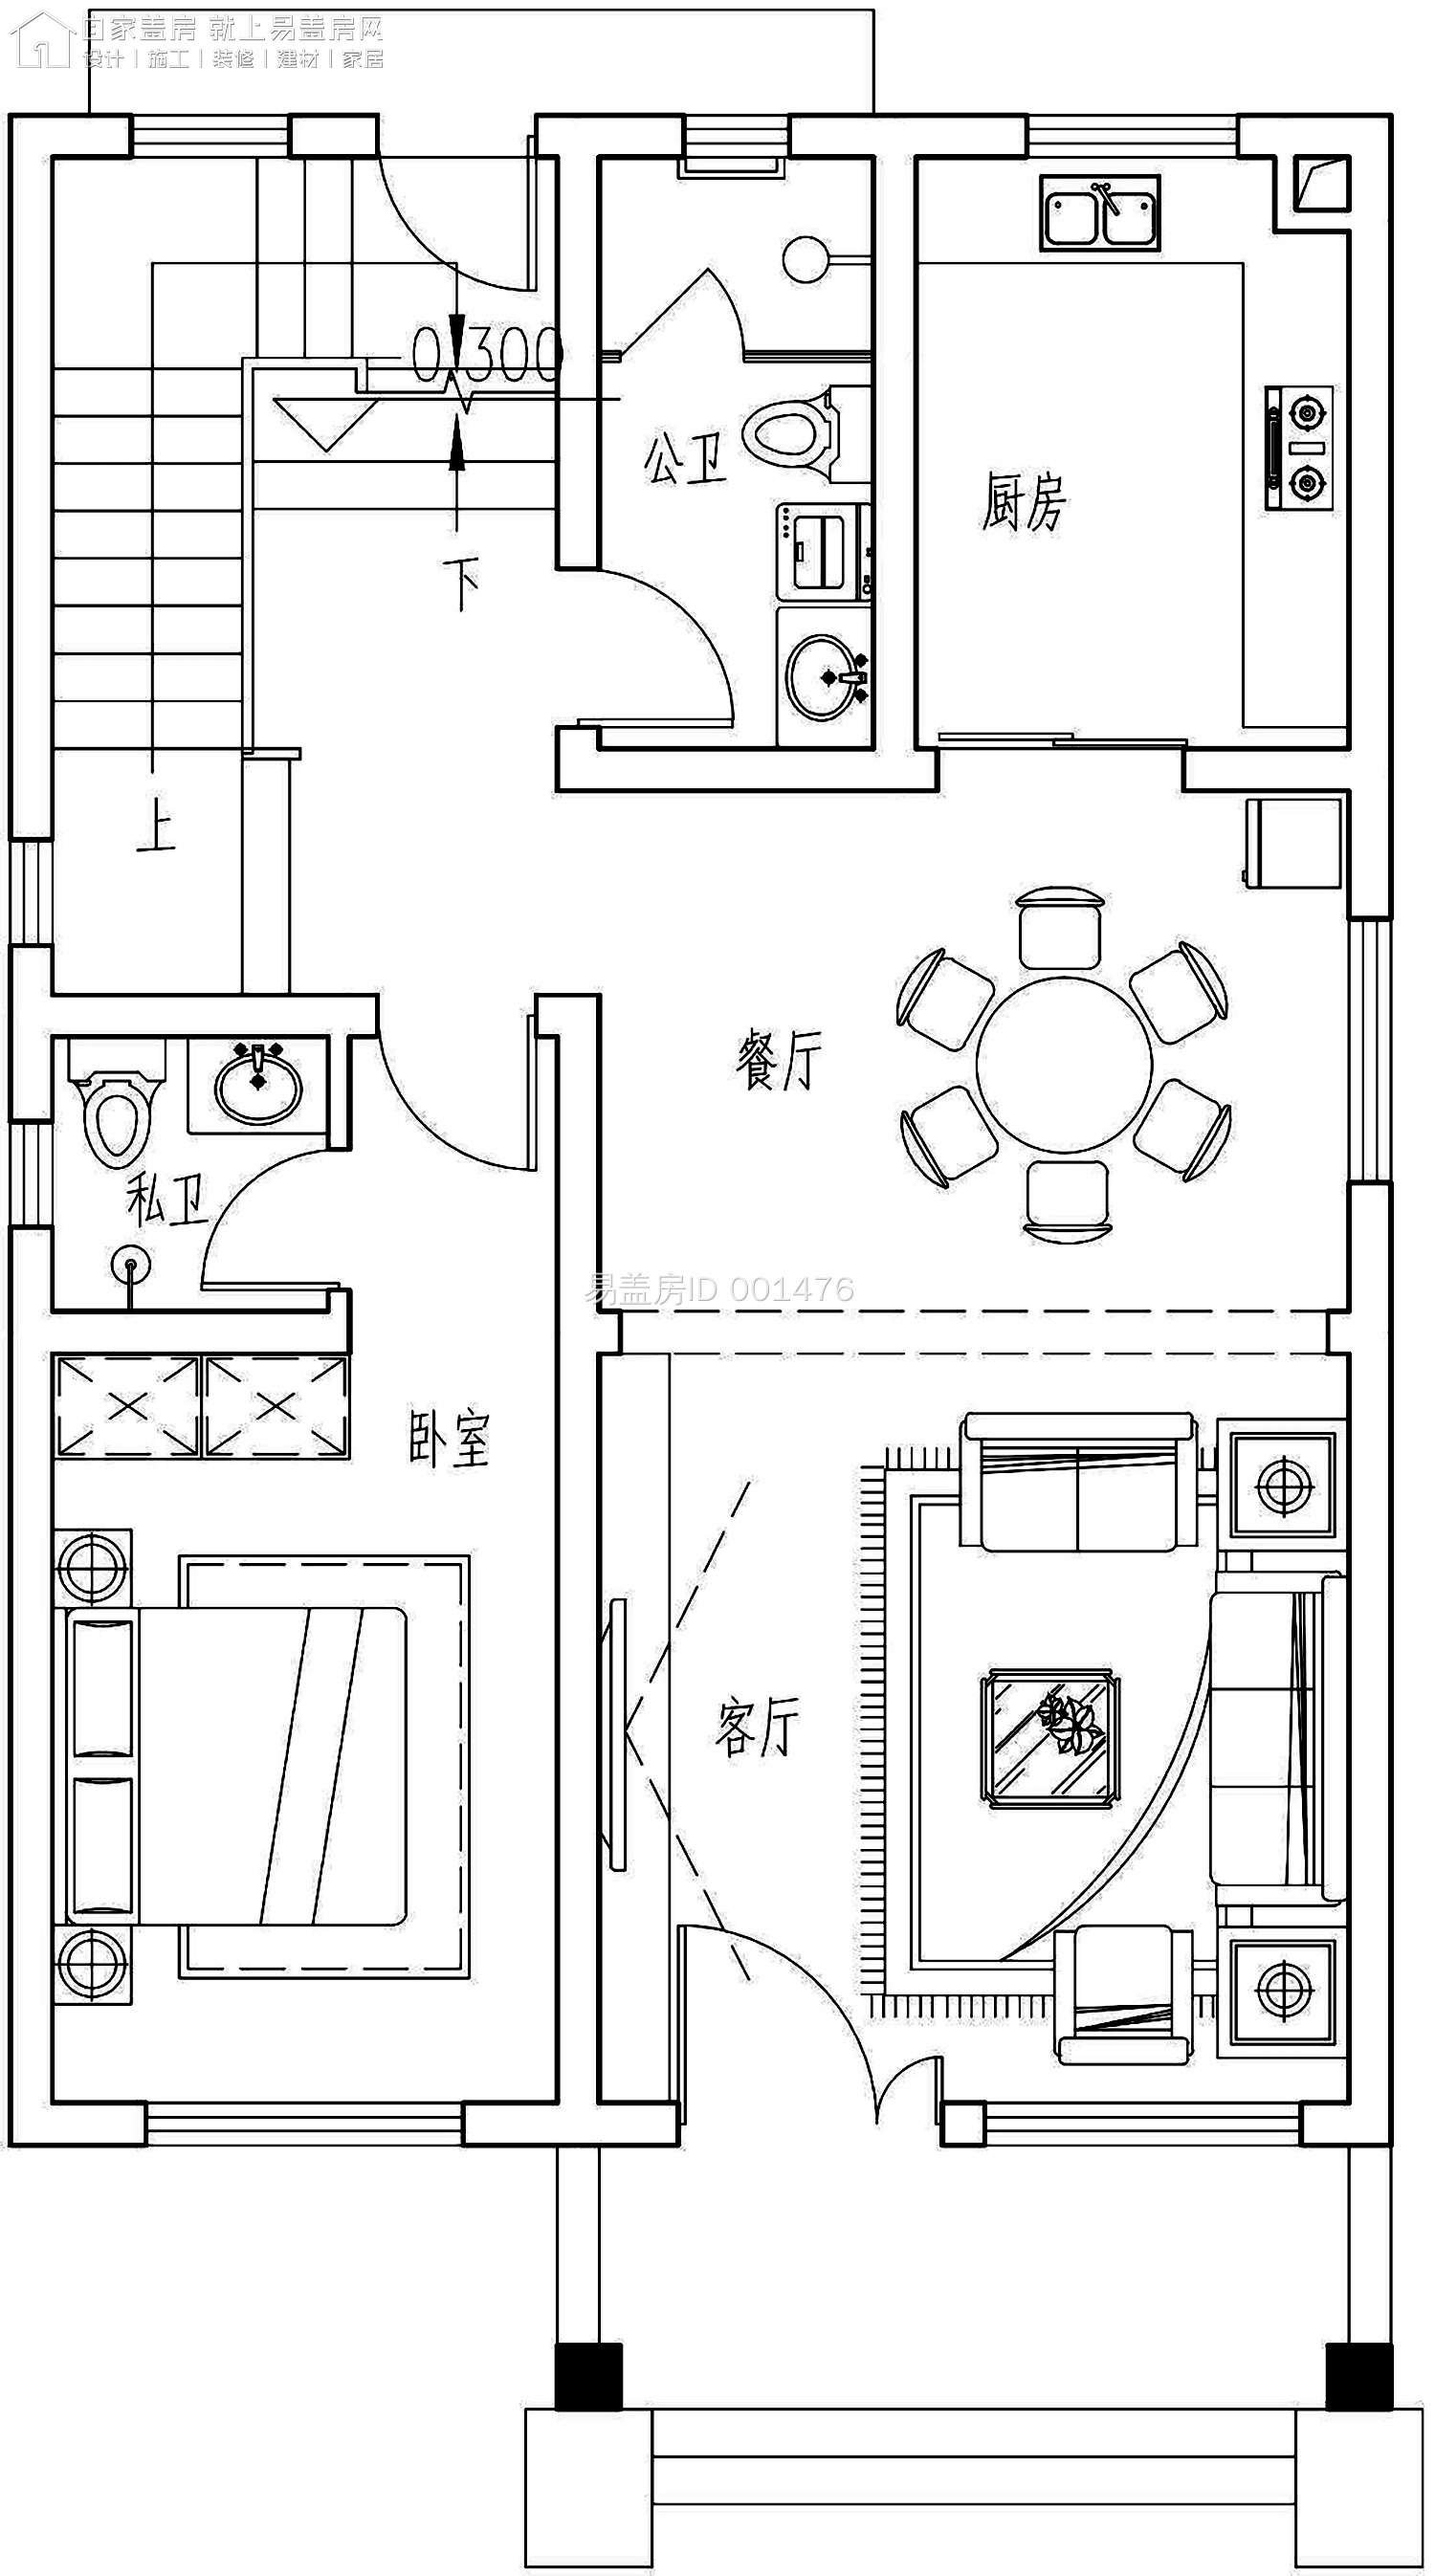 8x12米房屋设计图纸图片